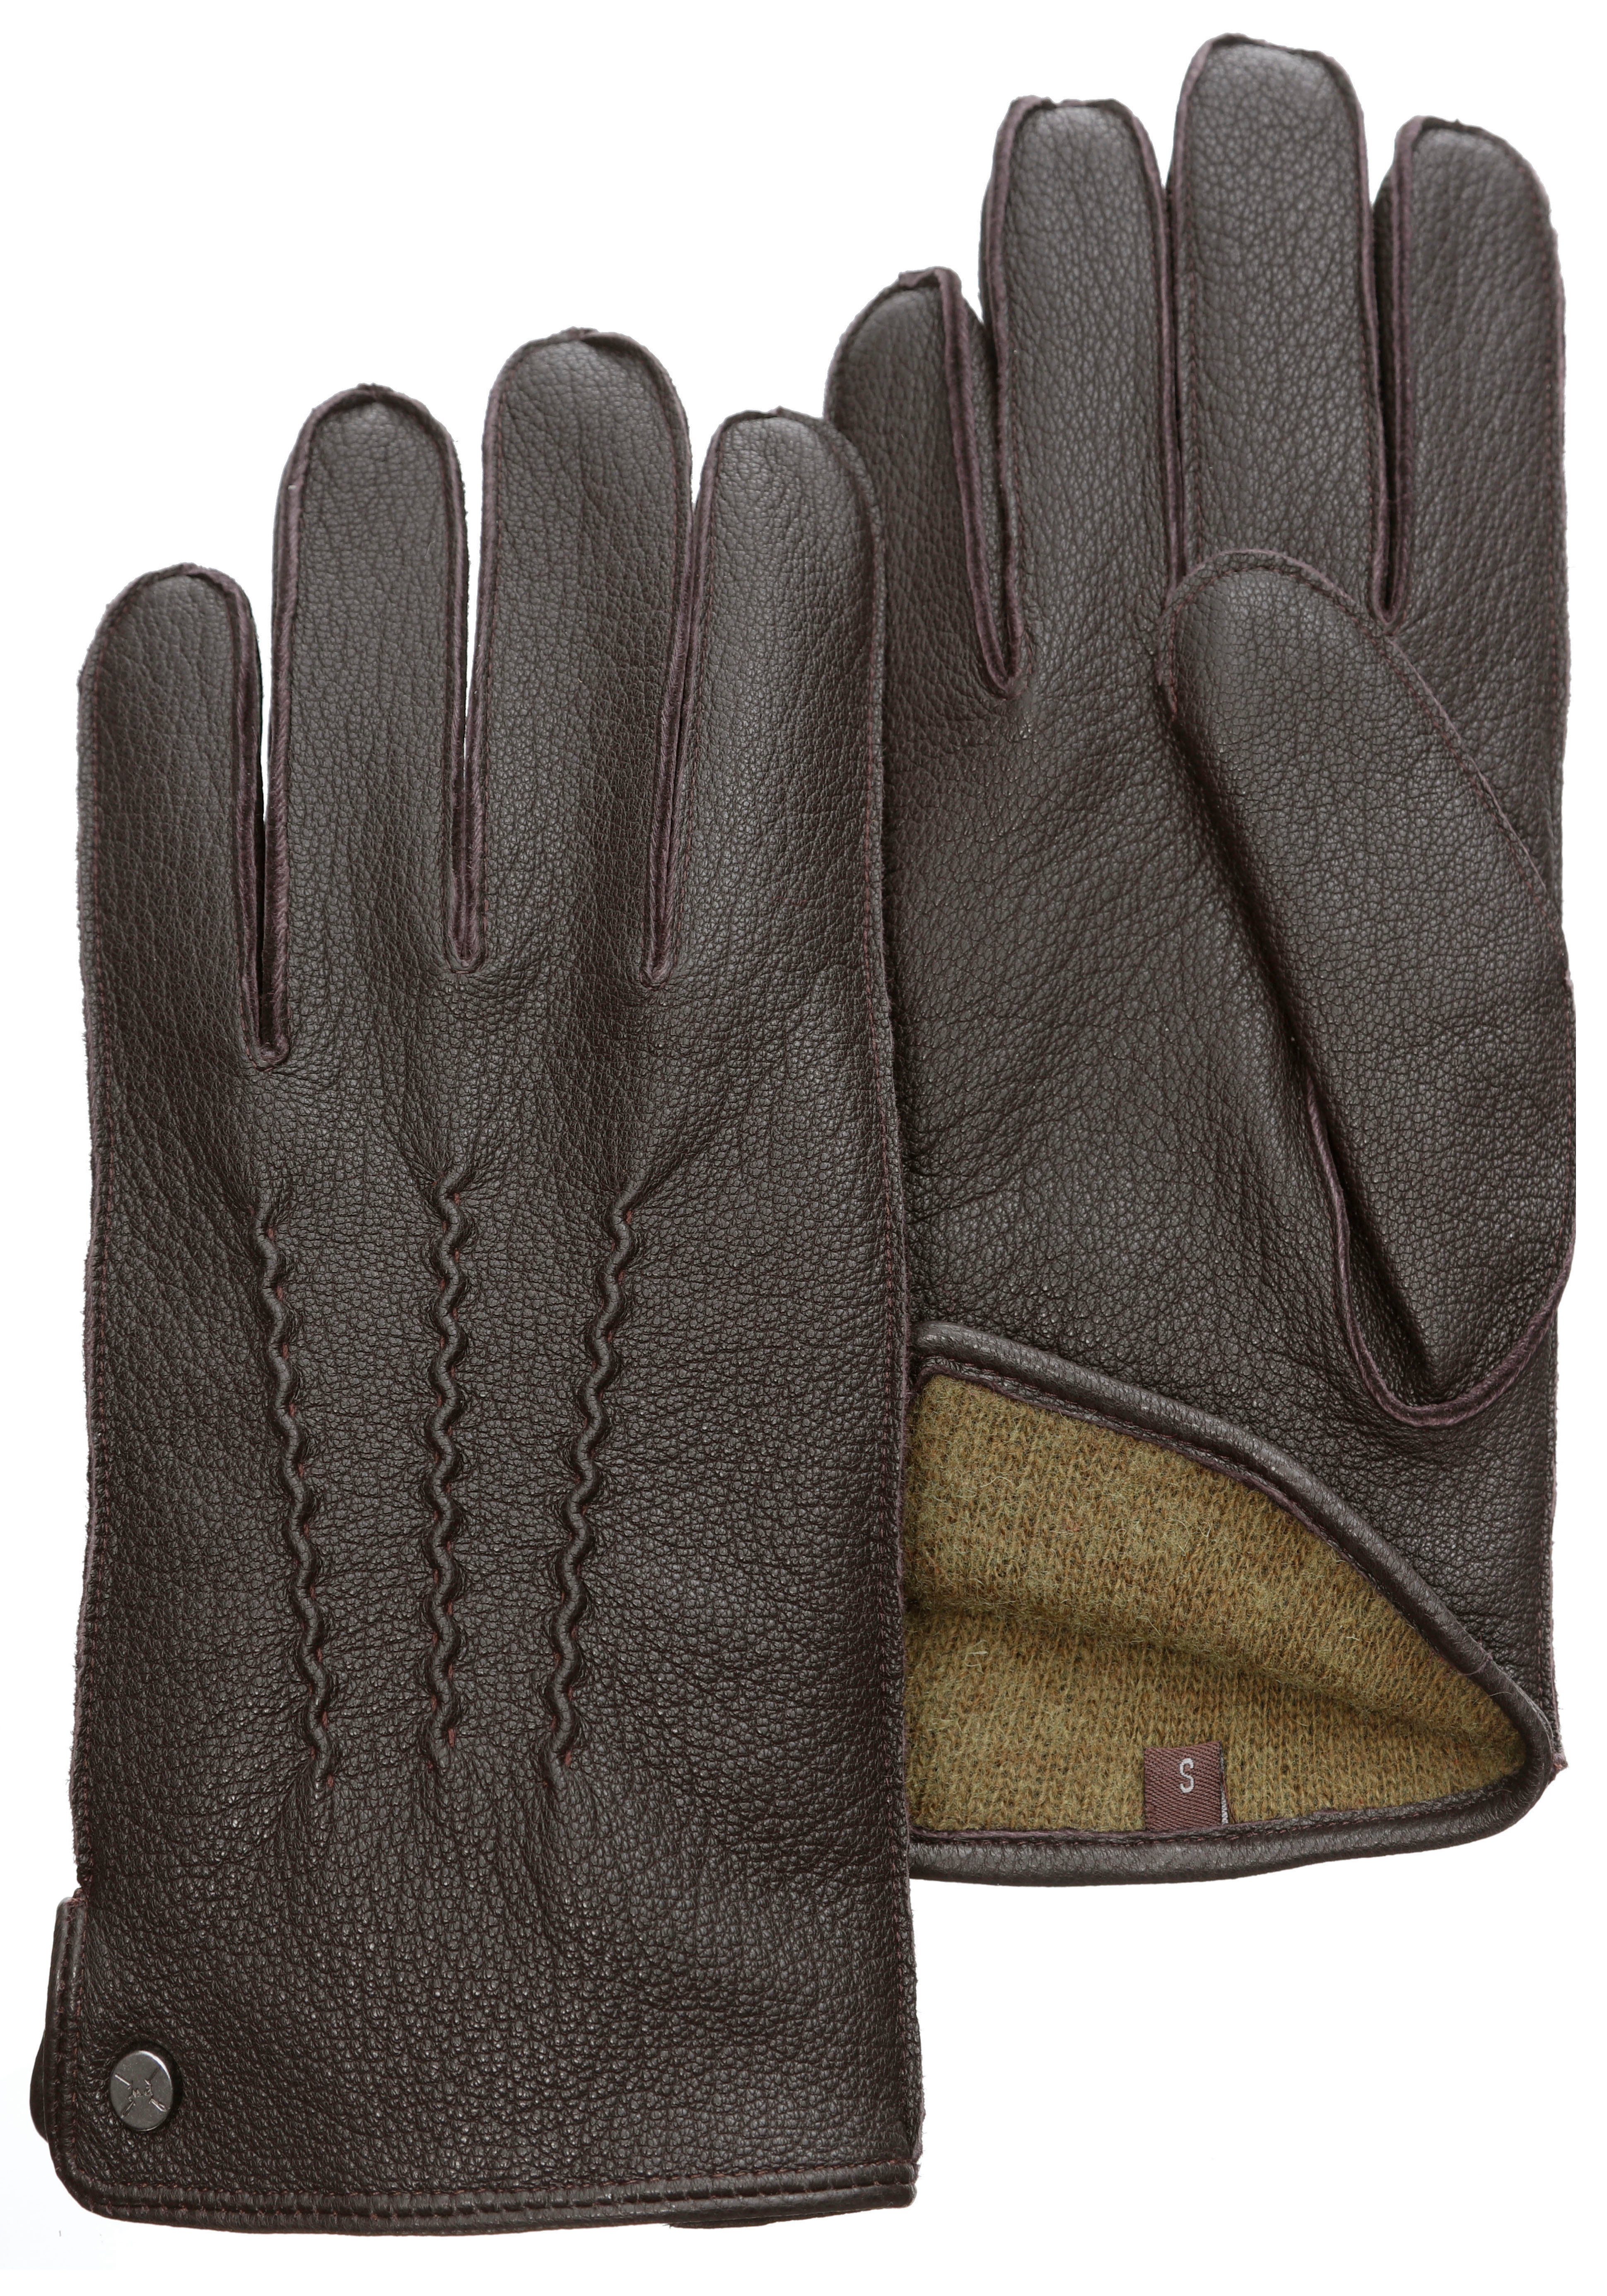 PEARLWOOD Lederhandschuhe Luke Atmungsaktiv, Wärmeregulierend, Wind - und Wasserabweisend hazel | Handschuhe